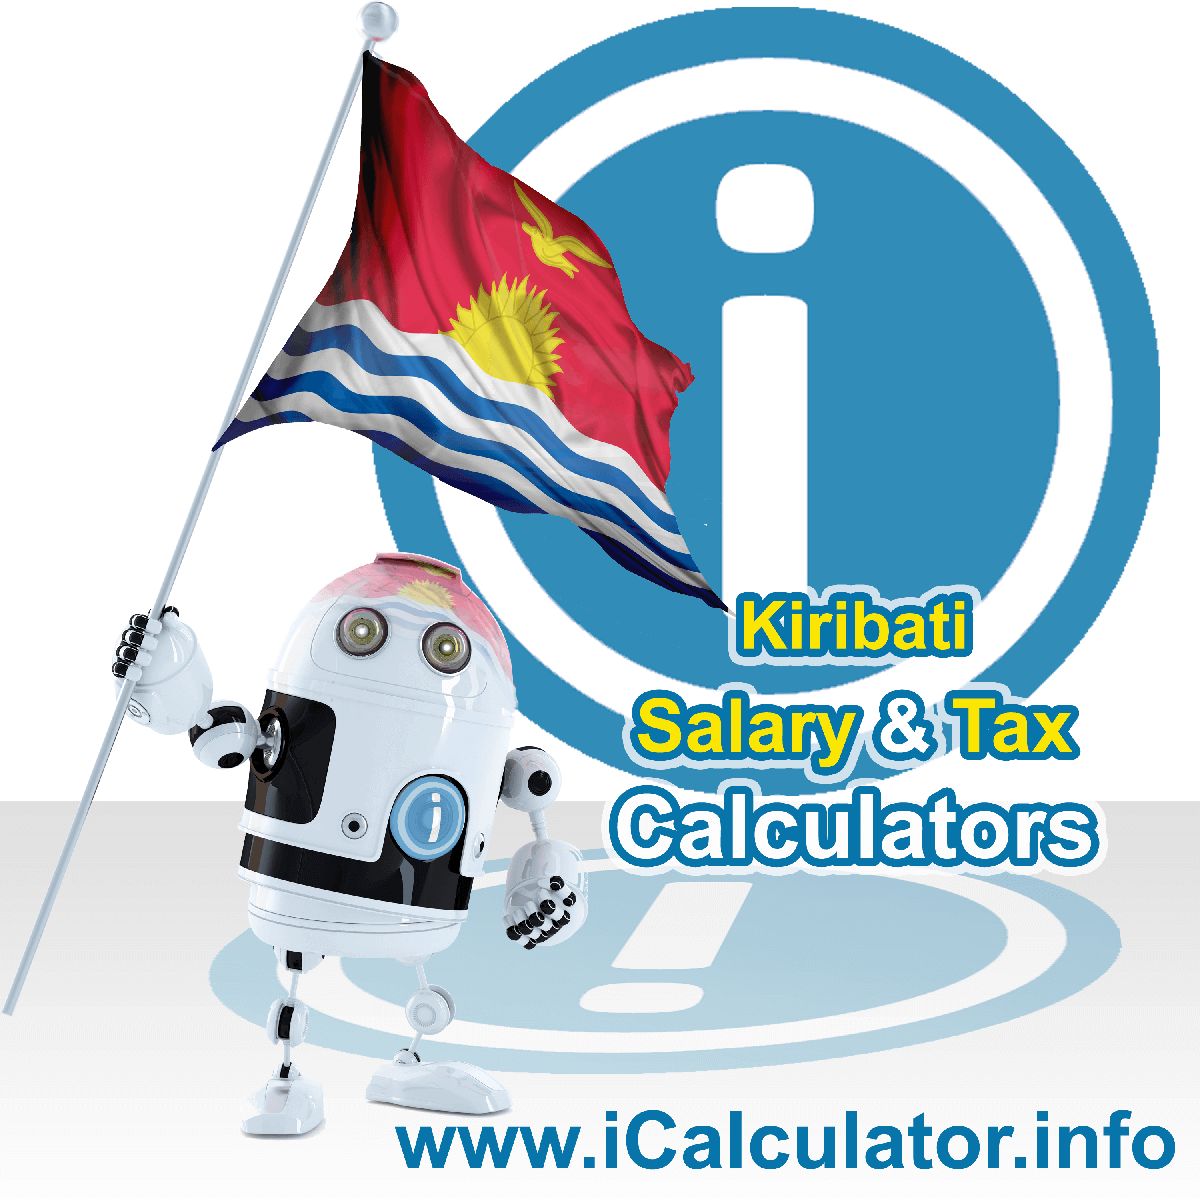 Kiribati Salary Calculator. This image shows the Kiribatiese flag and information relating to the tax formula for the Kiribati Tax Calculator